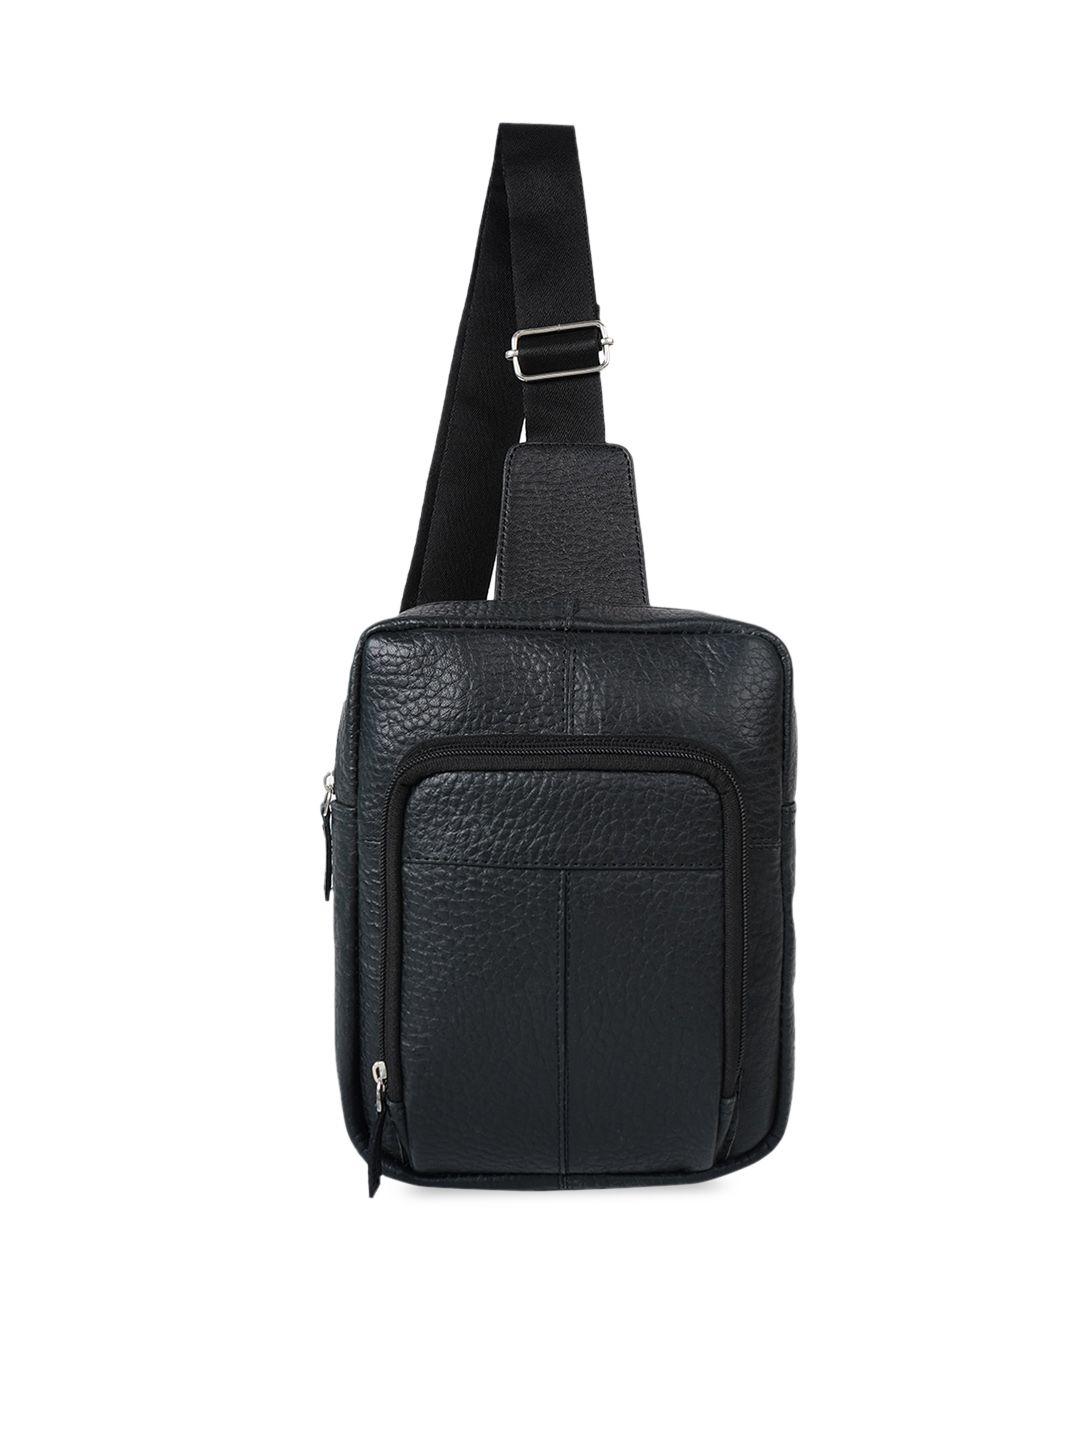 cimoni leather structured handheld crossbody bag